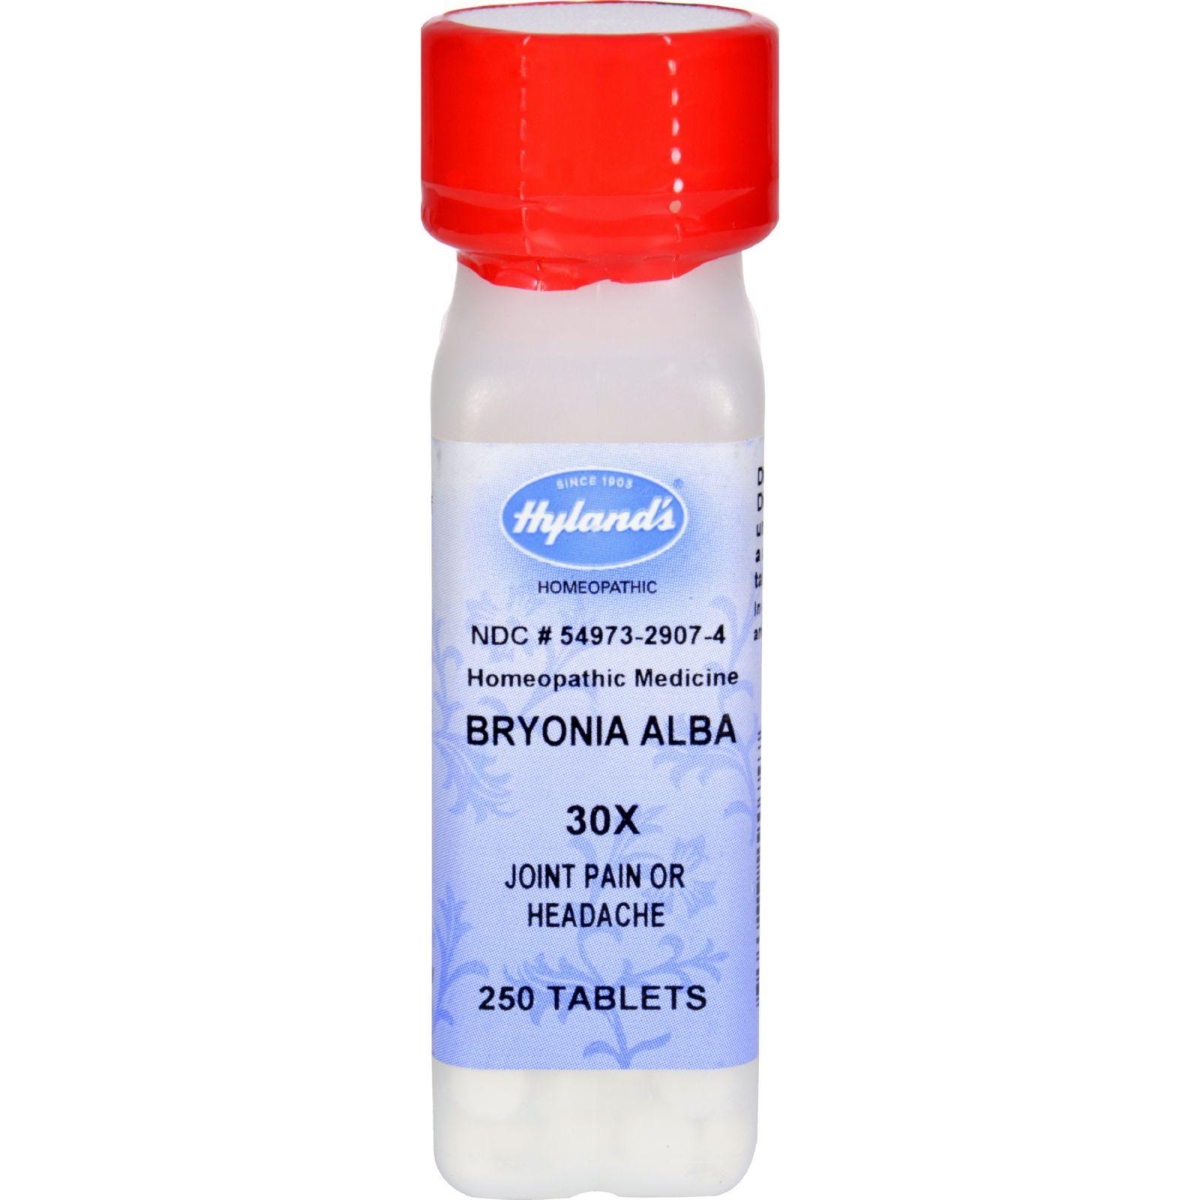 Hg0129866 Bryonia Alba 30x, 250 Tablets